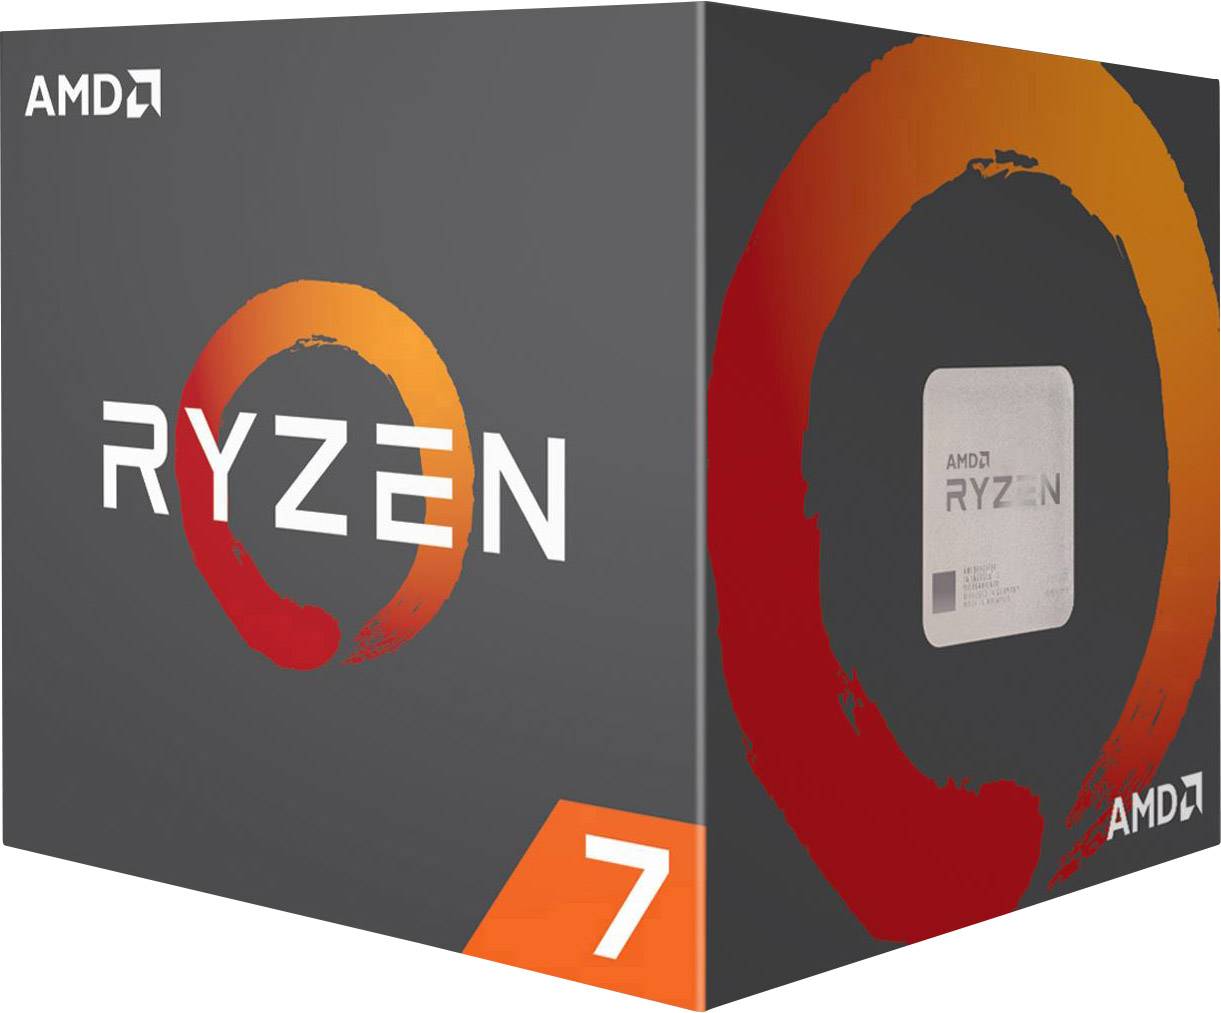 4. AMD Ryzen 7 3700X